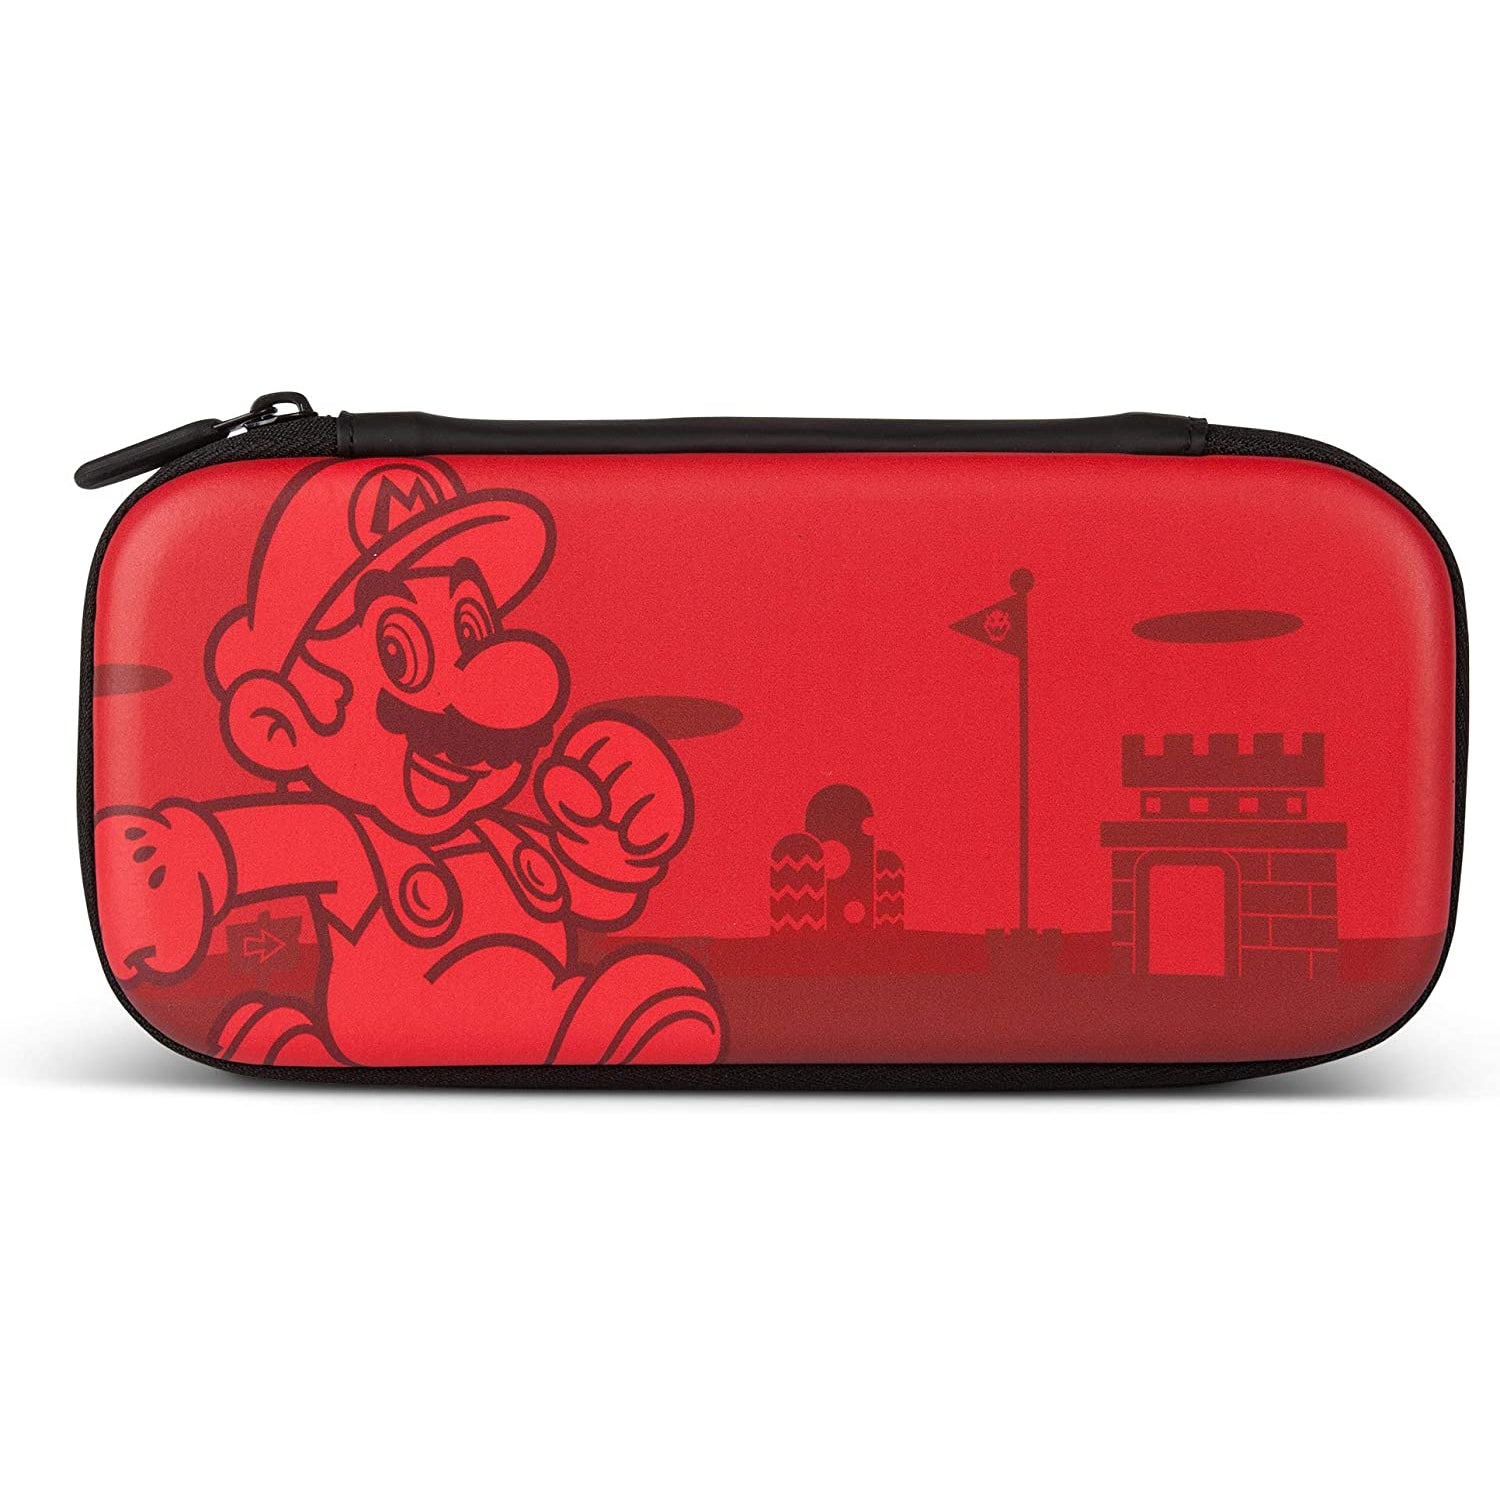 PowerA Stealth Case Kit for Nintendo Switch (Super Mario)